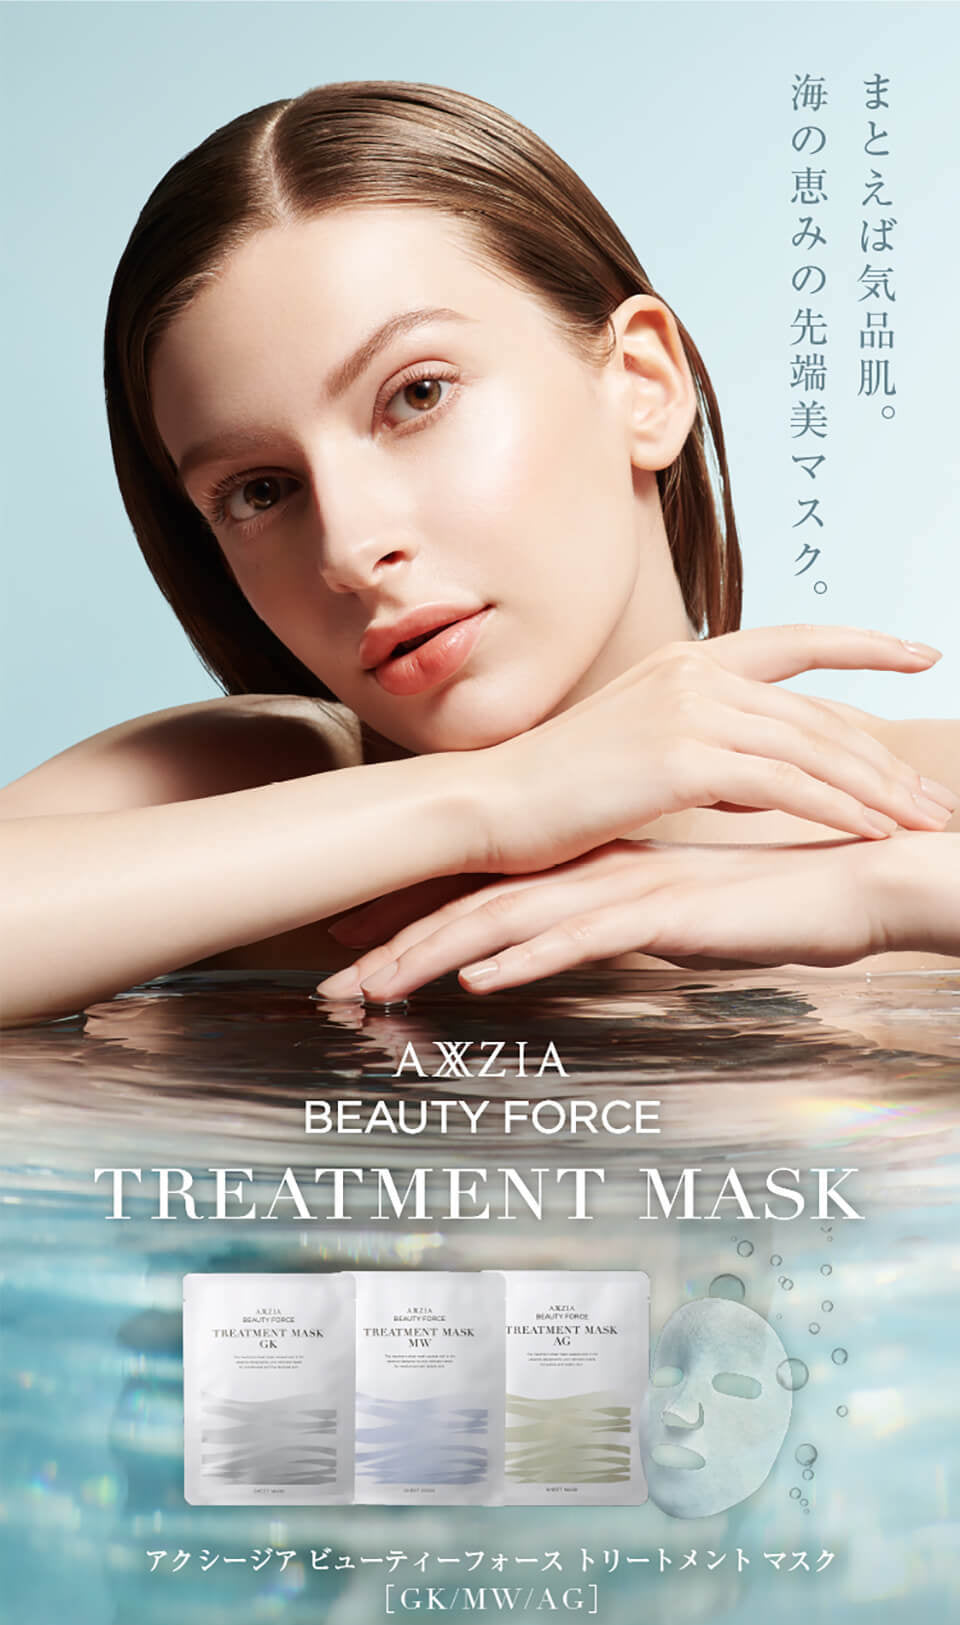 AXXZIA Beauty Force Treatment Mask #GK Repairing Type 7pcs